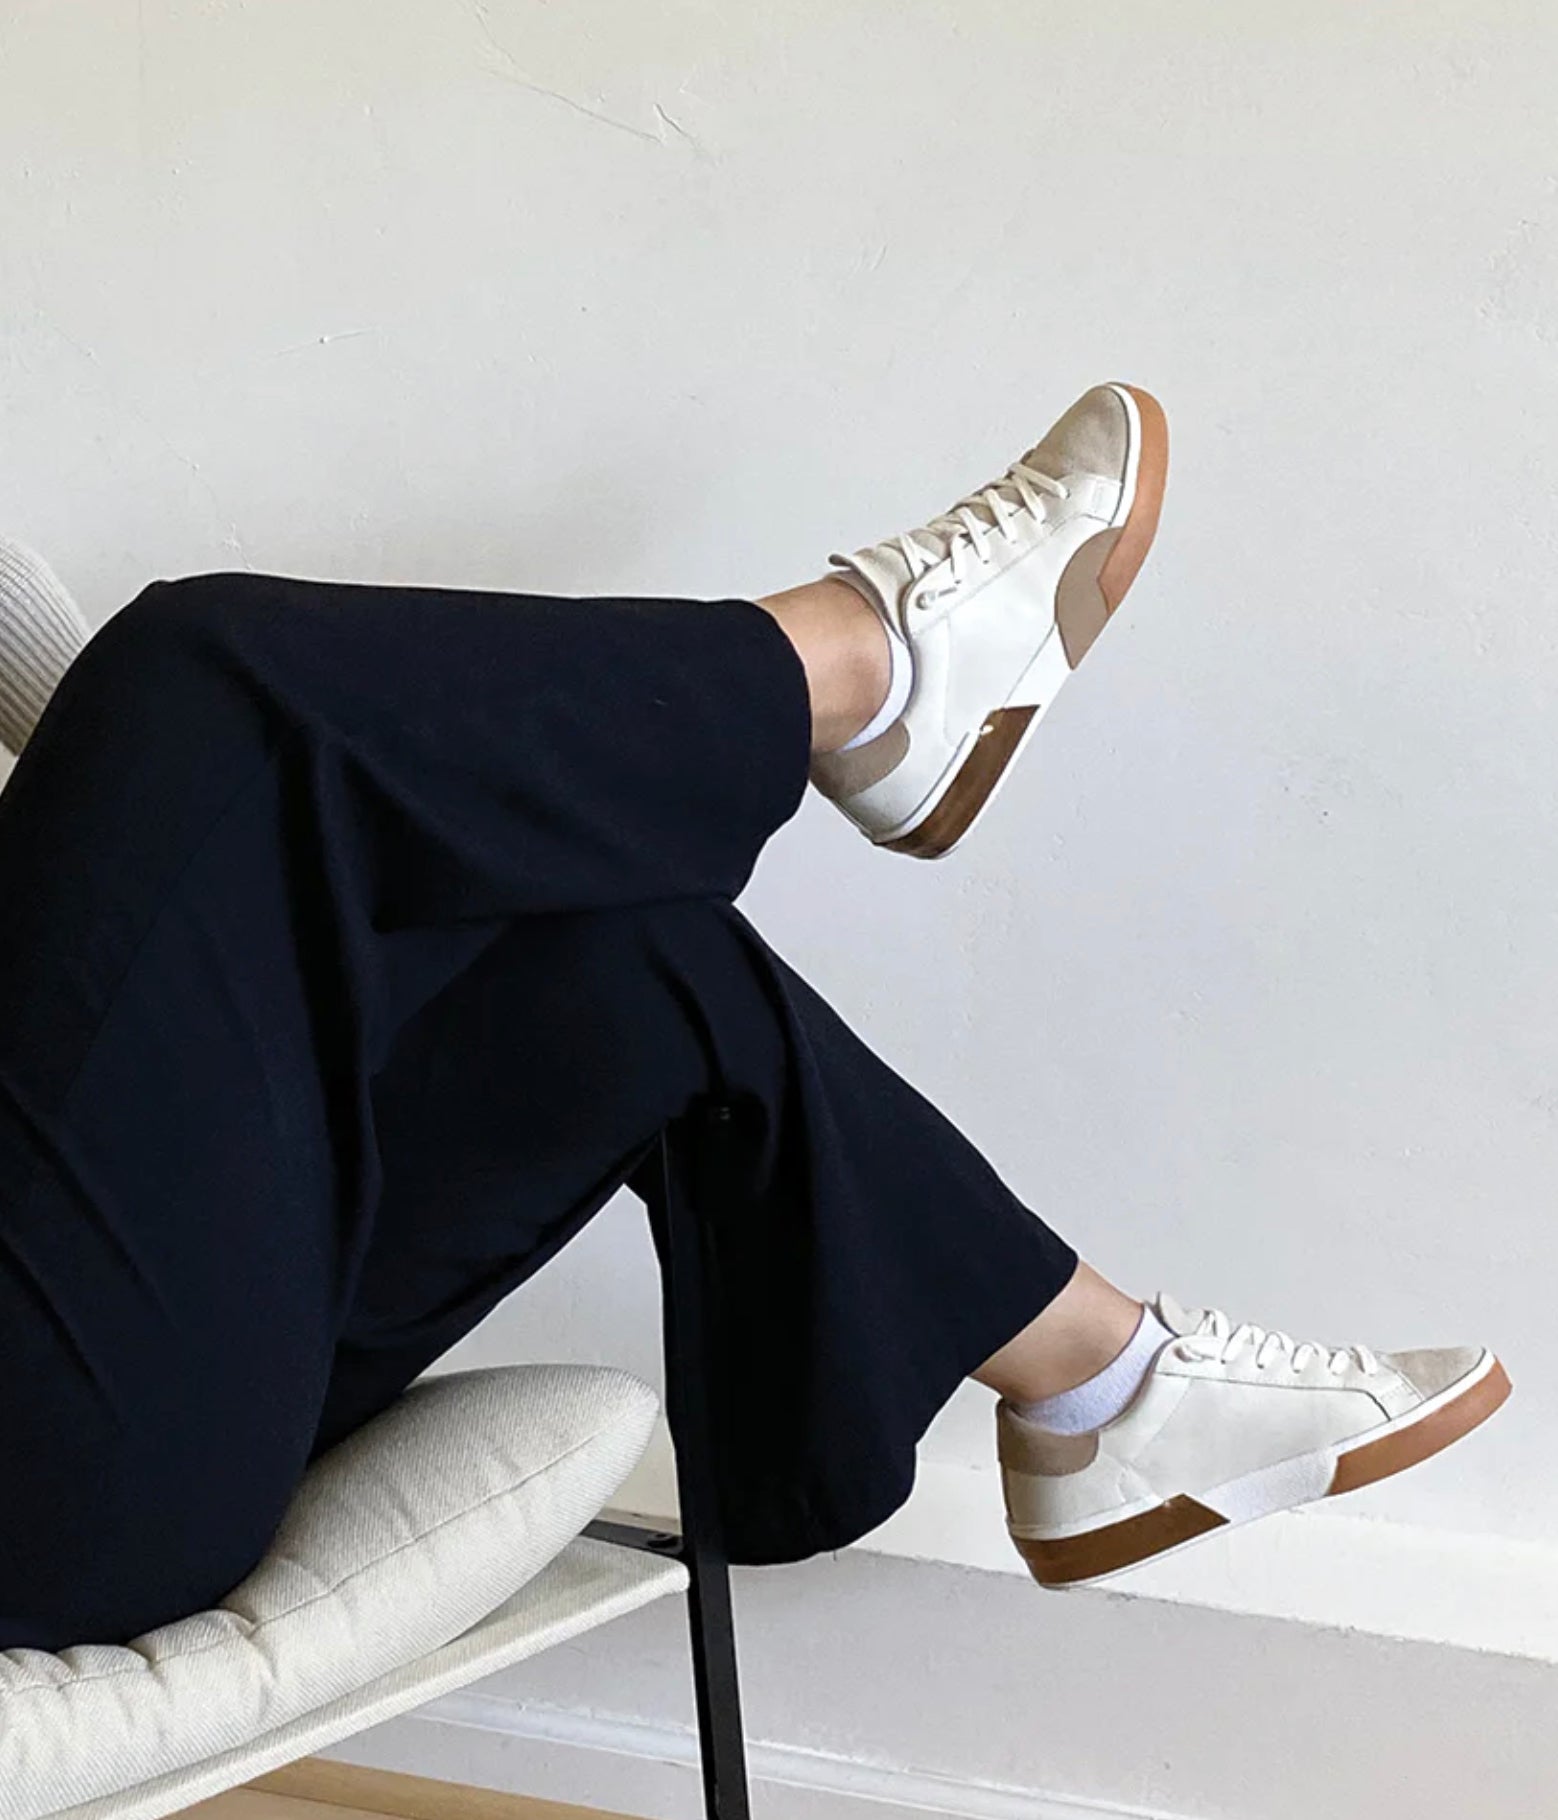 Zina Sneaker in White/Tan Leather